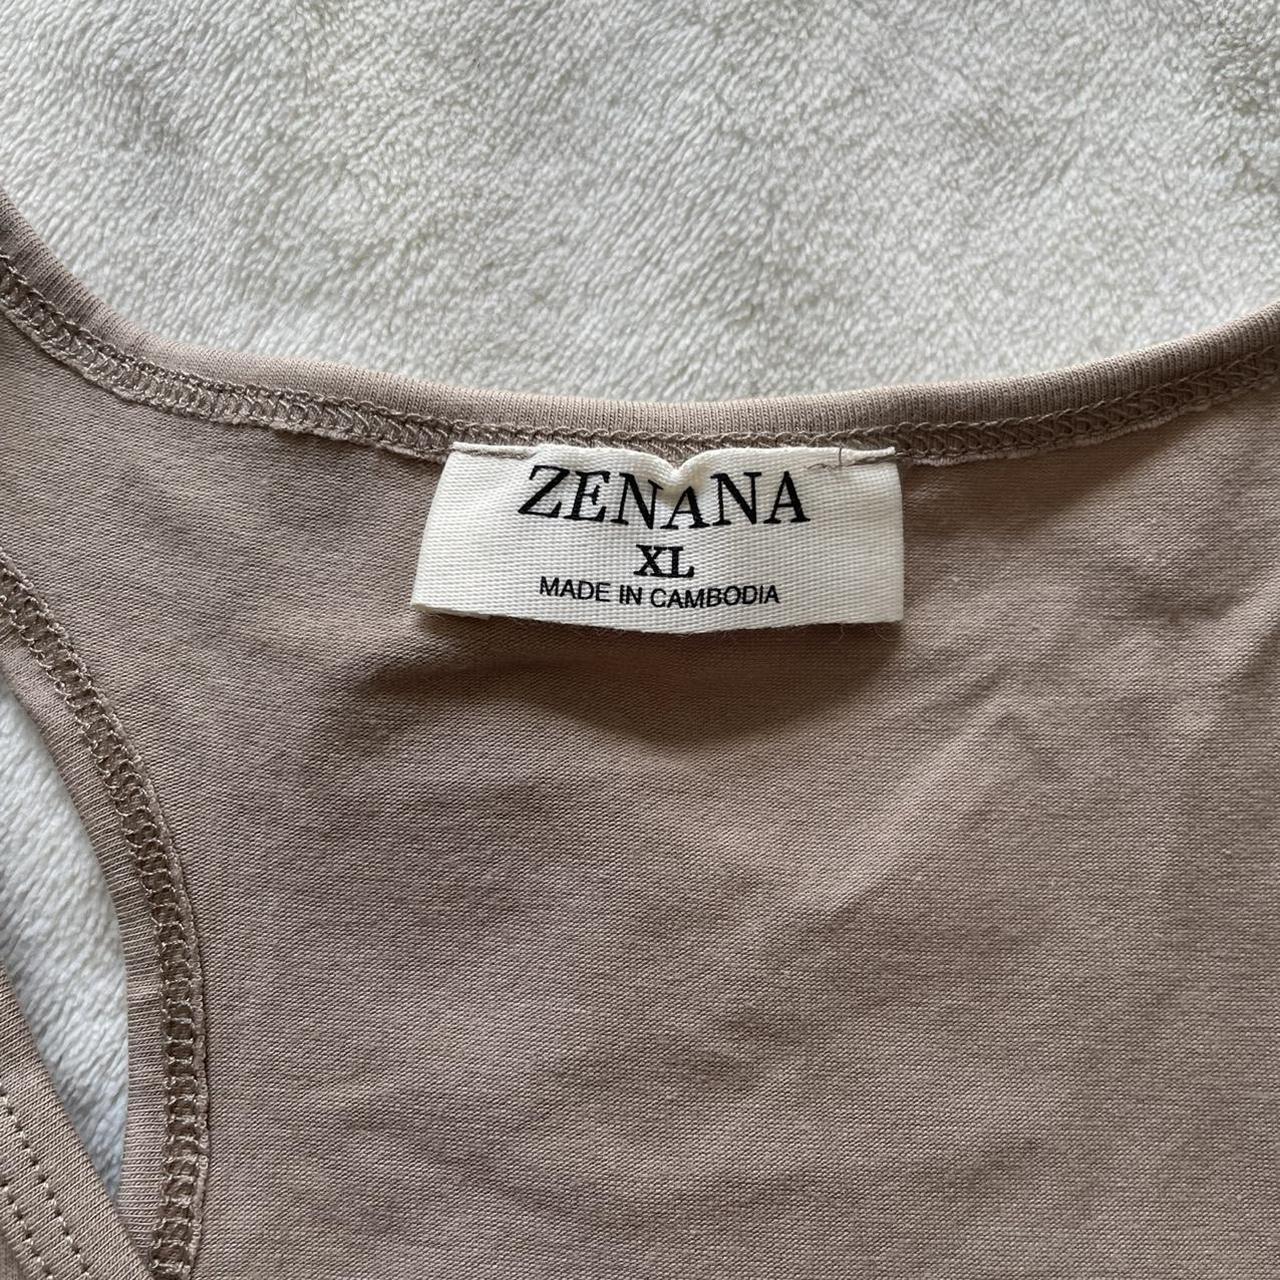 Product Image 2 - ZENANA BODYSUIT
-size xl
-brand new

🐝 shipping